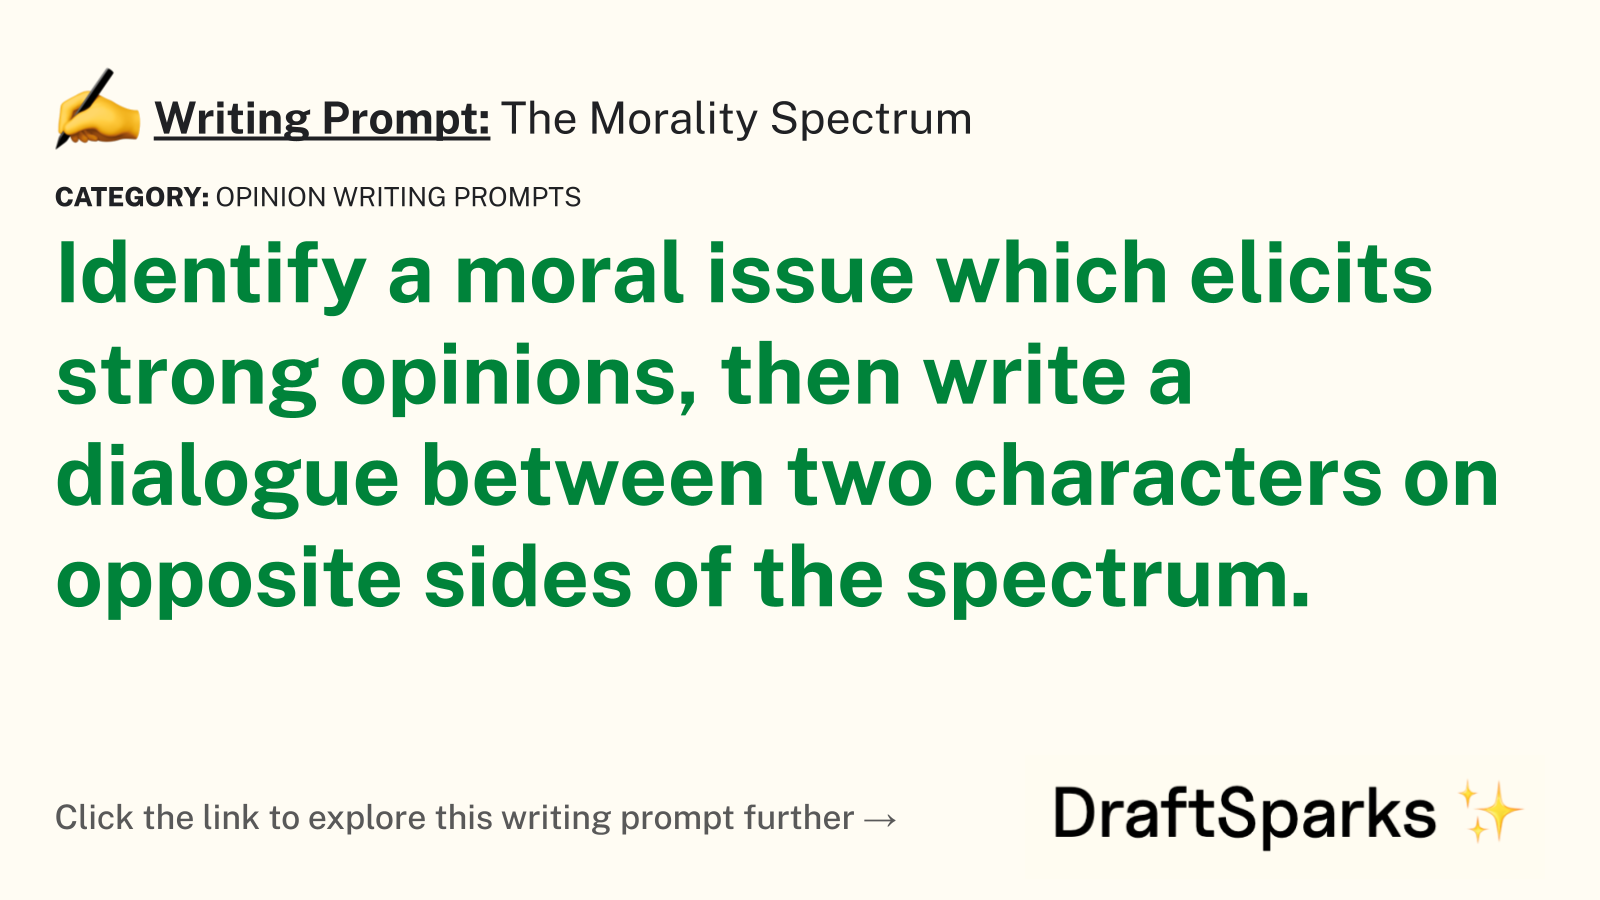 The Morality Spectrum